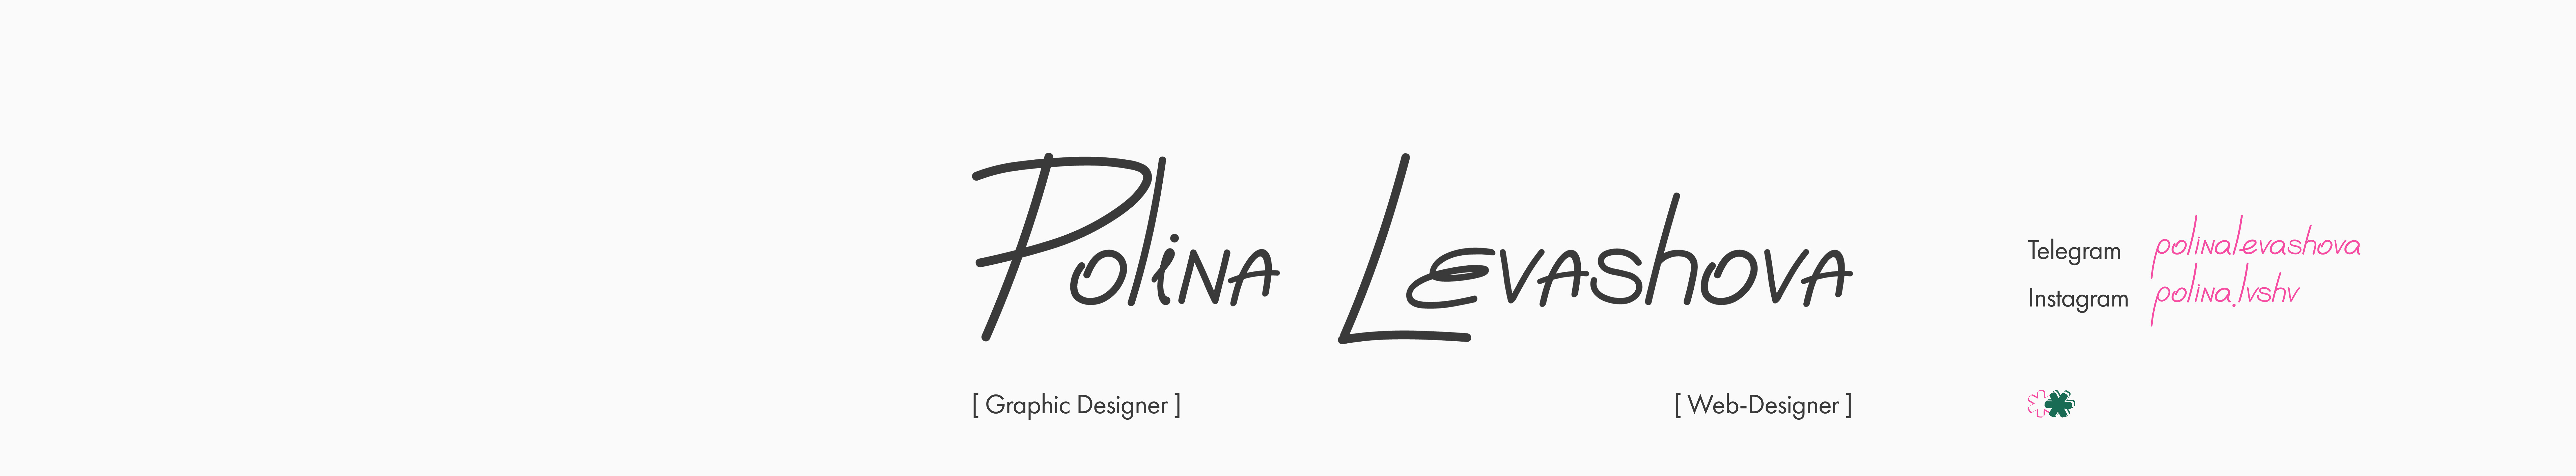 Polina Levashova profil başlığı